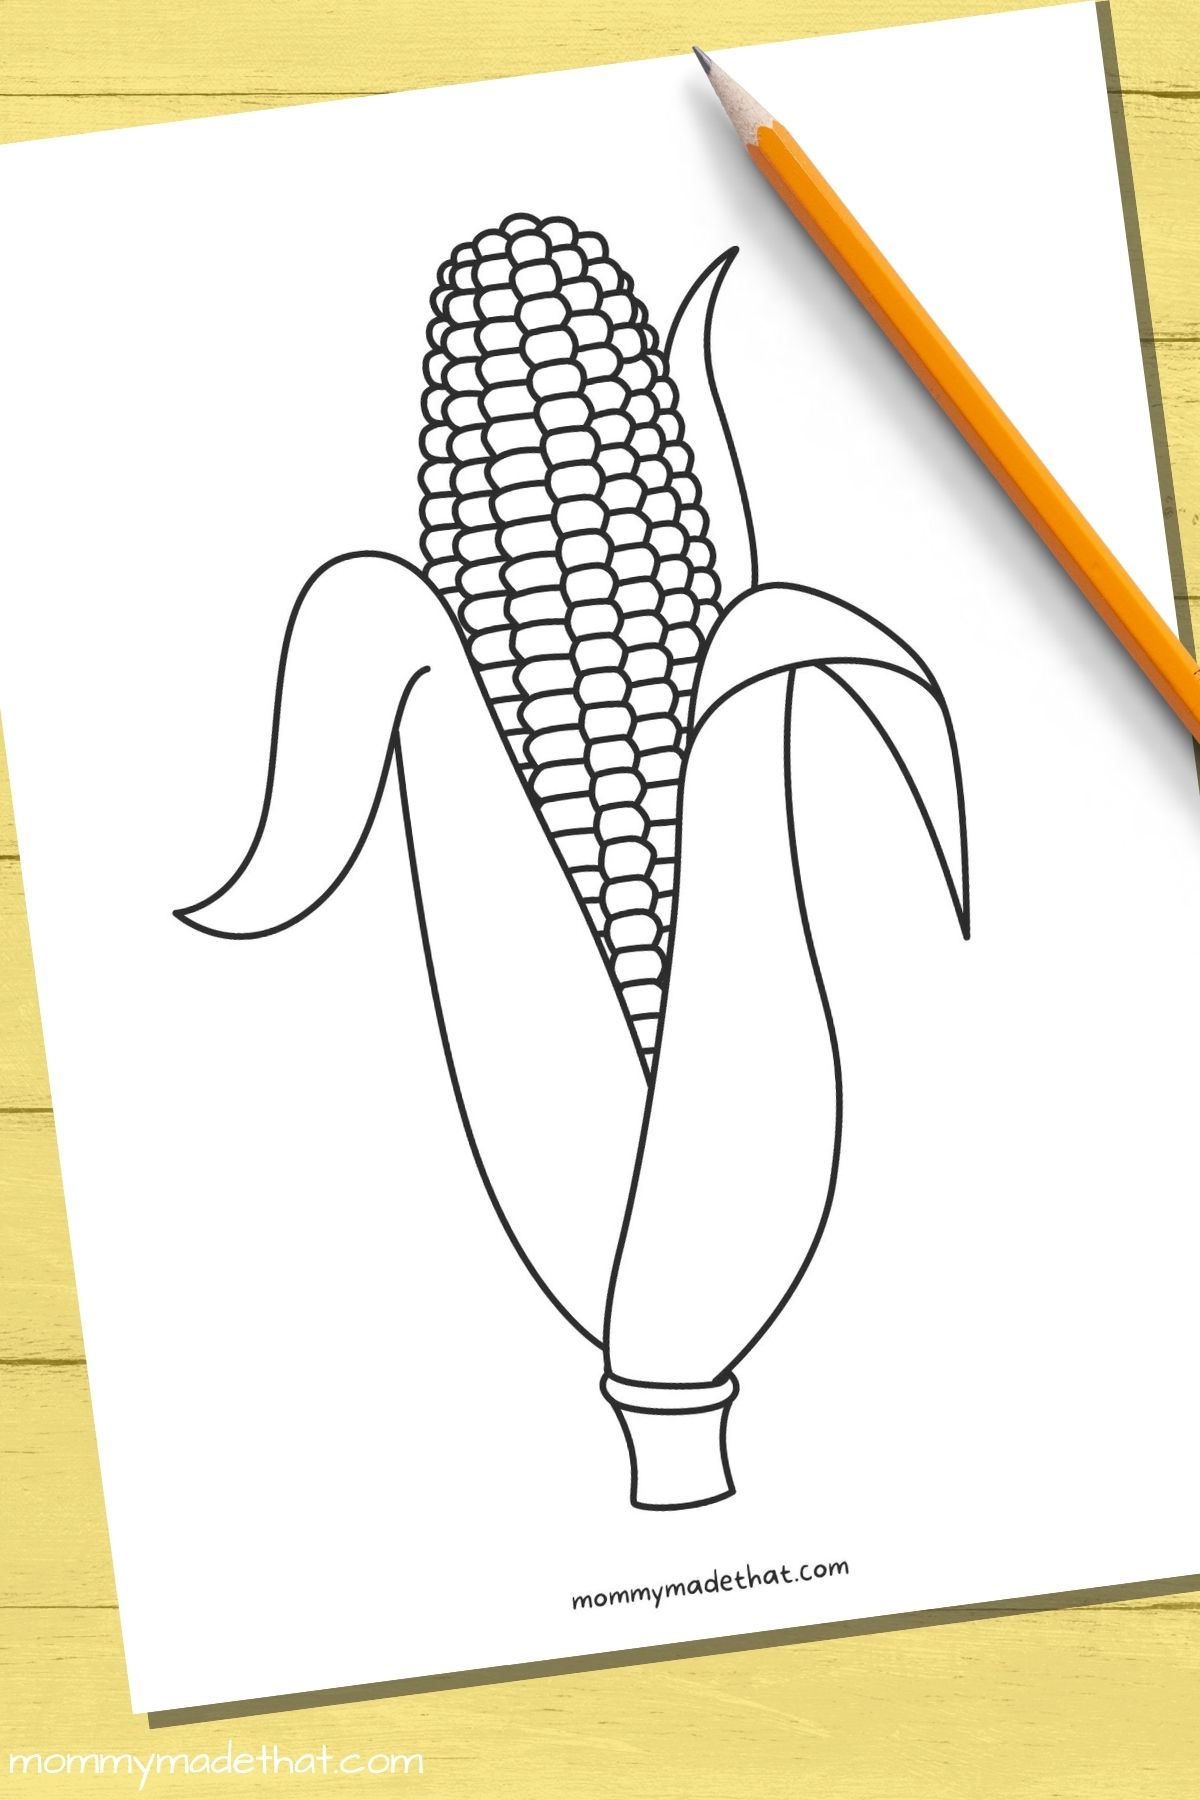 corn template